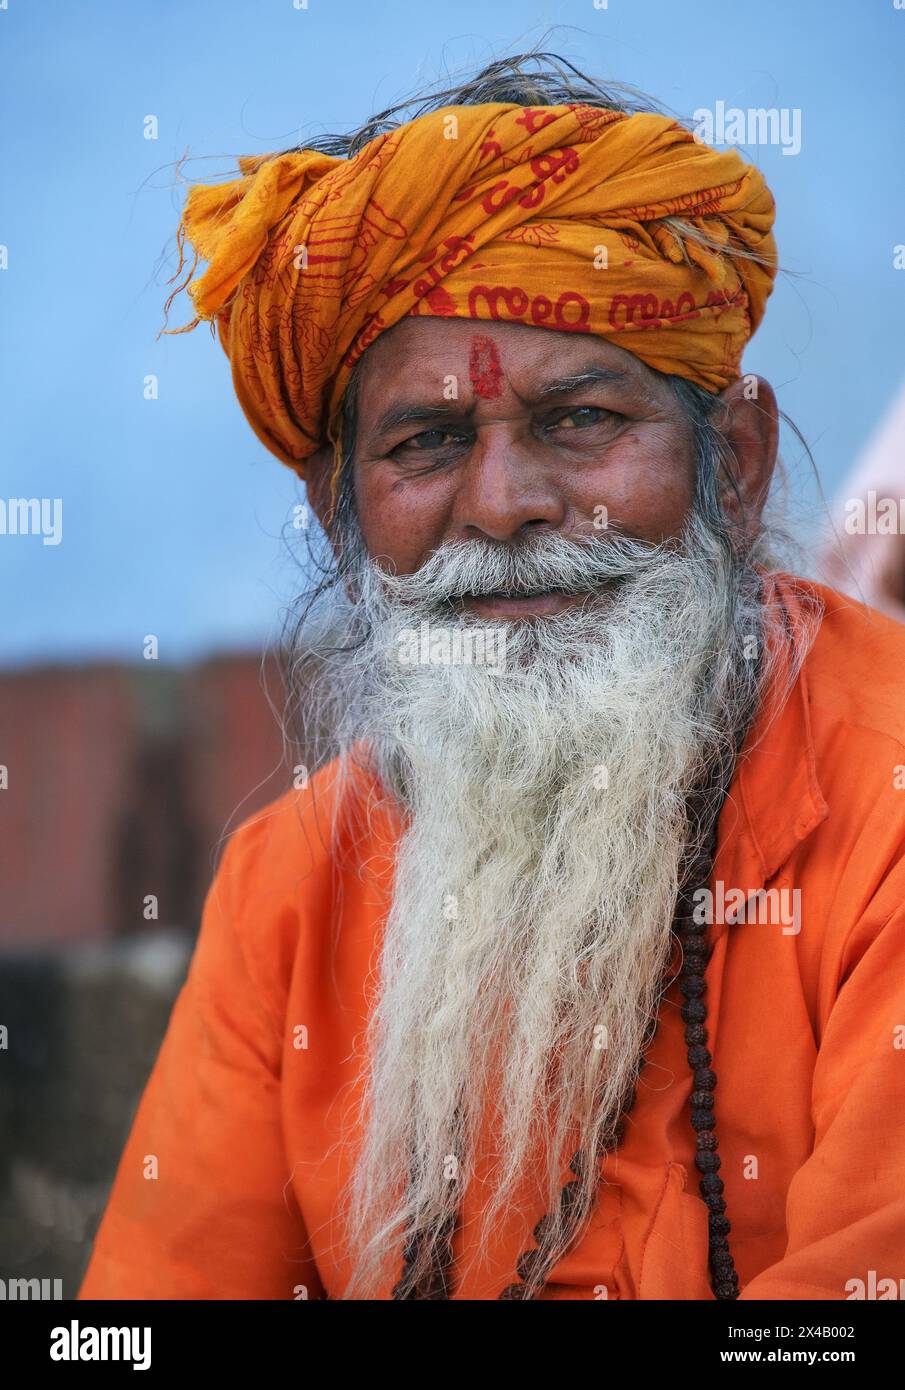 Sadhu or spiritual aspirant in Varanasi, India Stock Photo